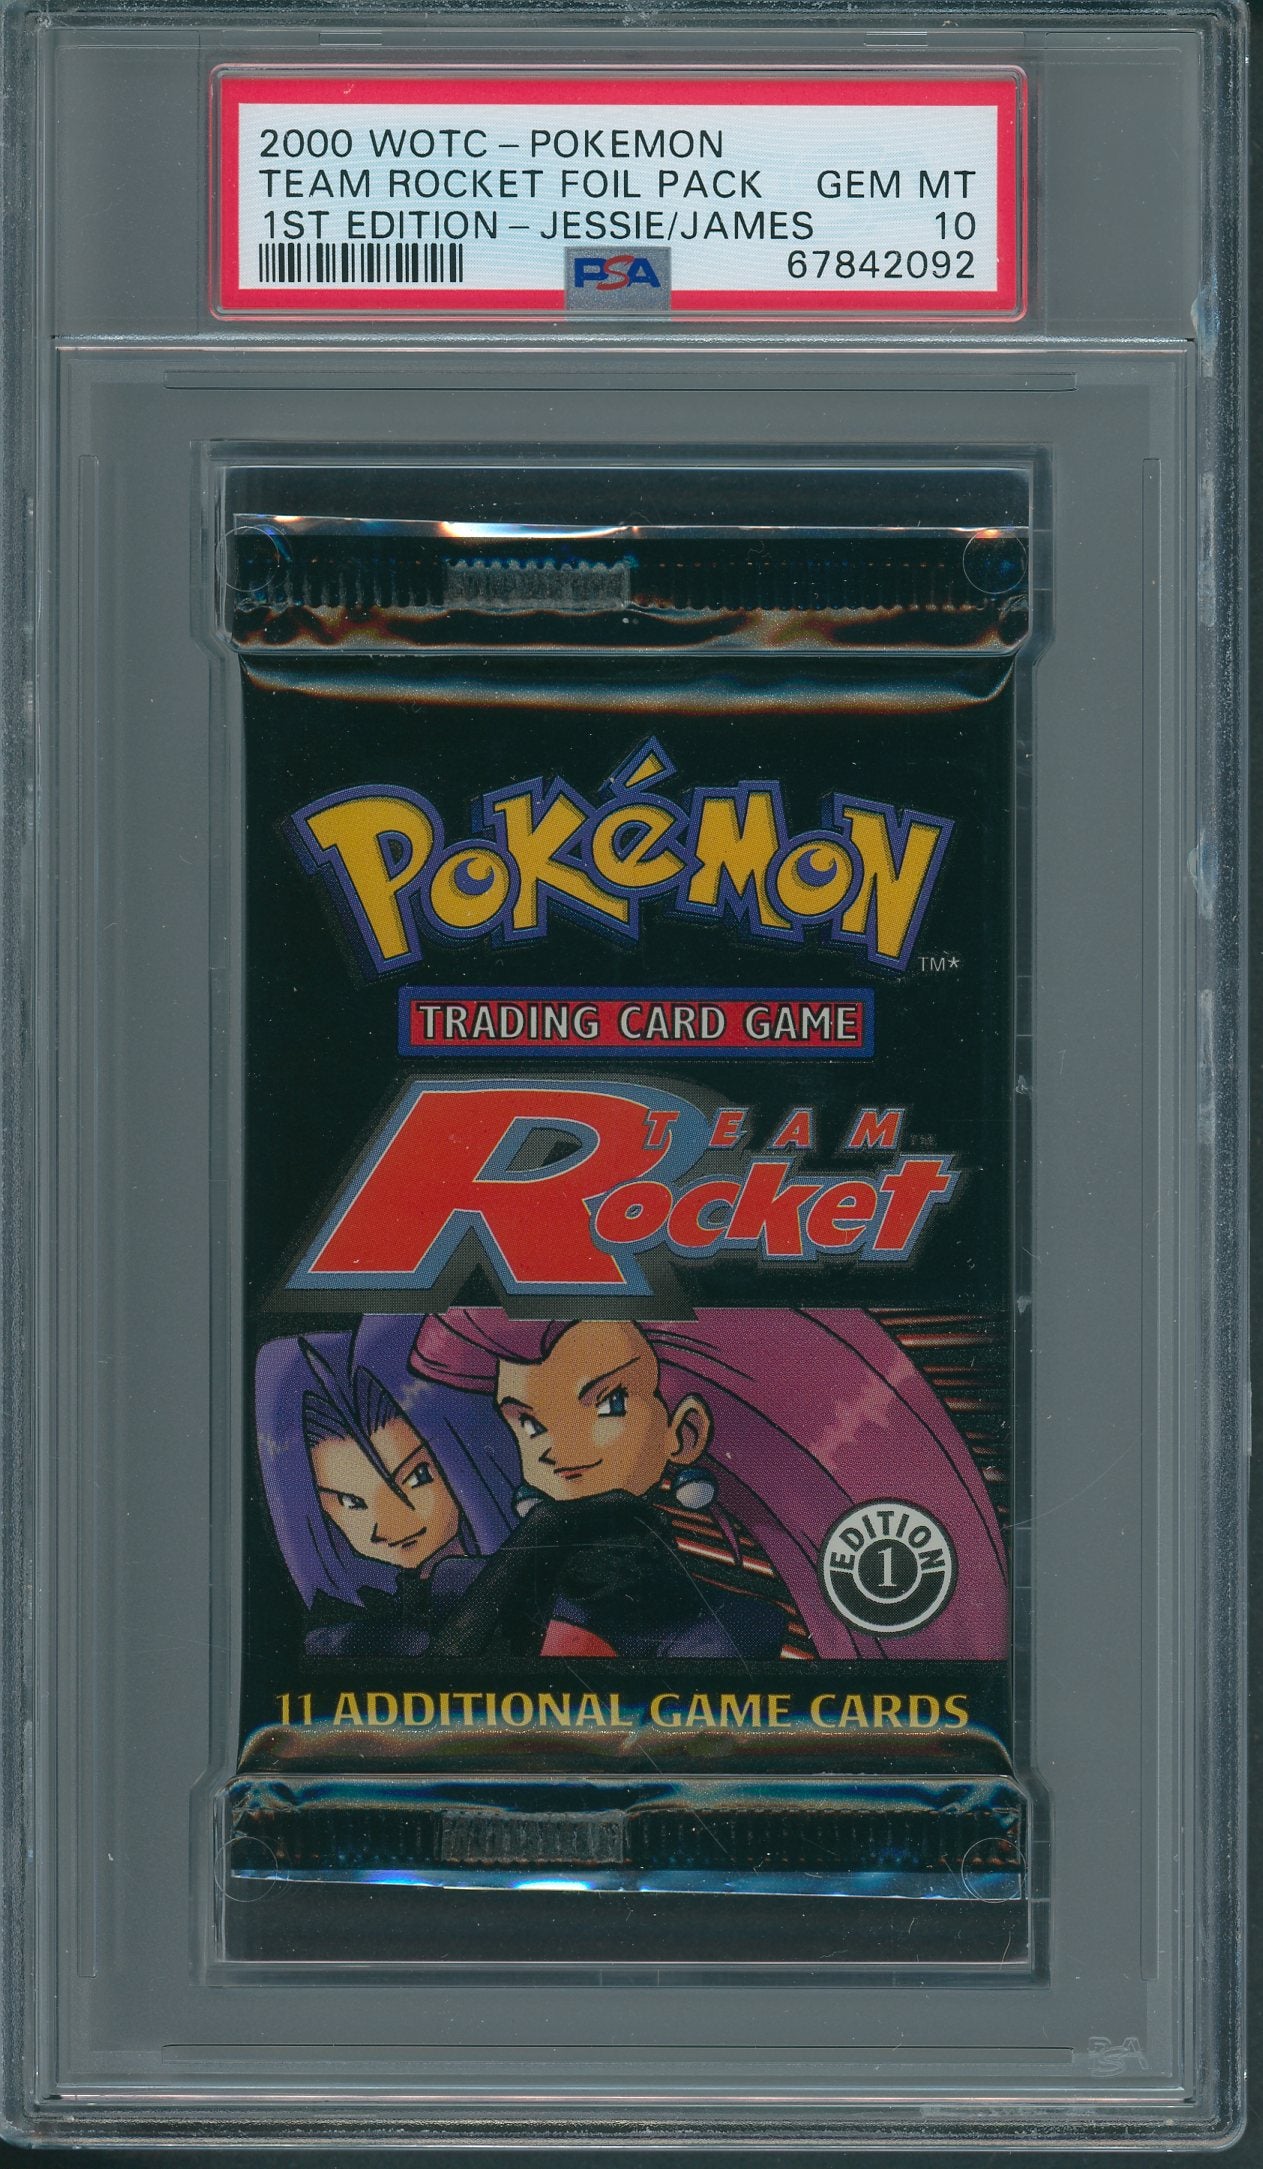 2000 WOTC Pokemon Team Rocket Unopened 1st Edition Foil Pack Jessie/James PSA 10 *2092